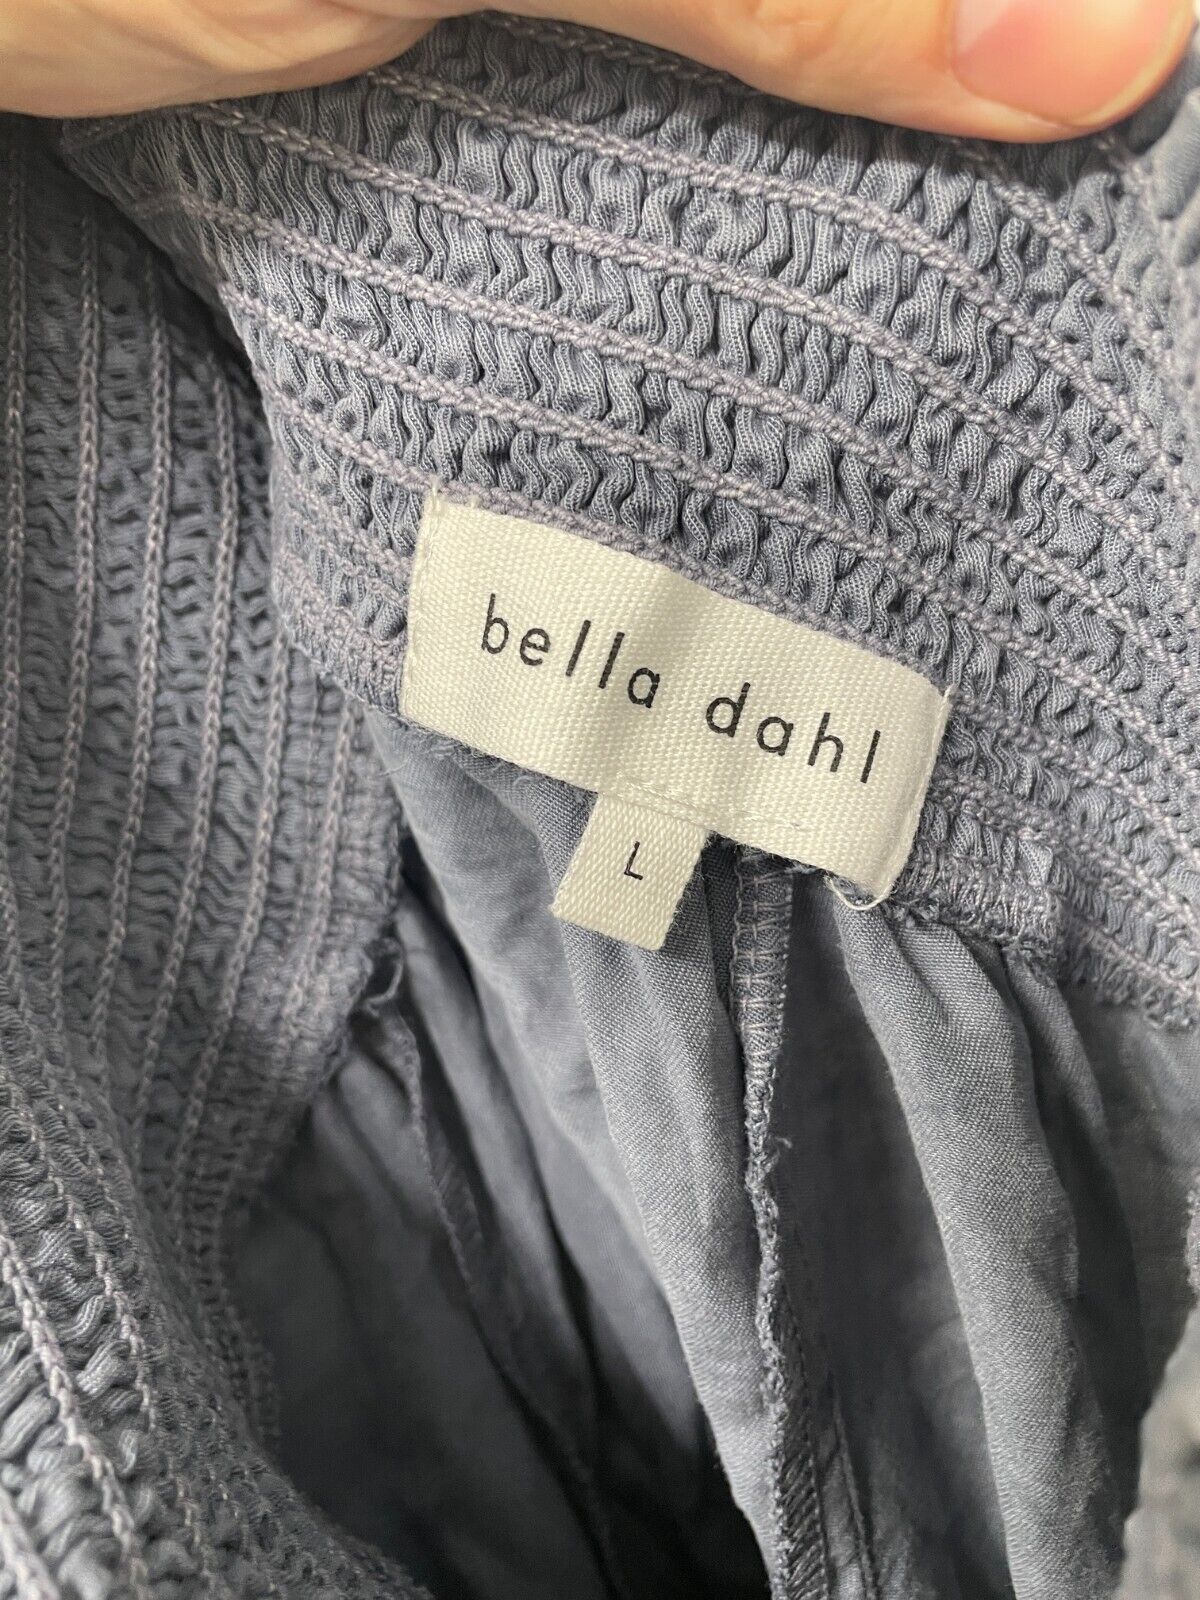 Bella Dahl Women's L Smocked Waist Printed Wide Leg Pants Indigo Stripe Tie Dye